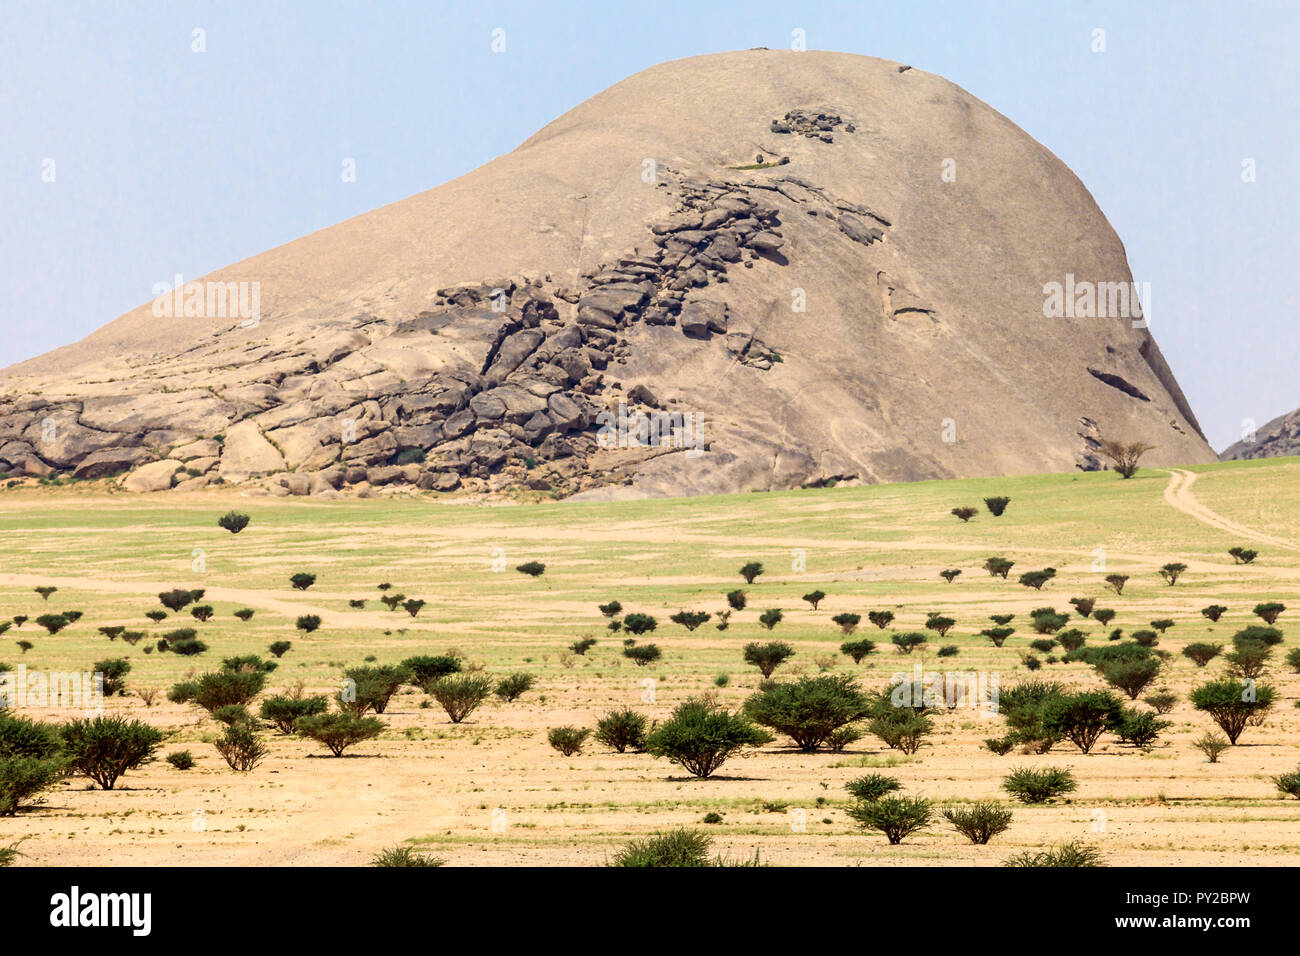 Rock formation in the desert, Saudi Arabia Stock Photo